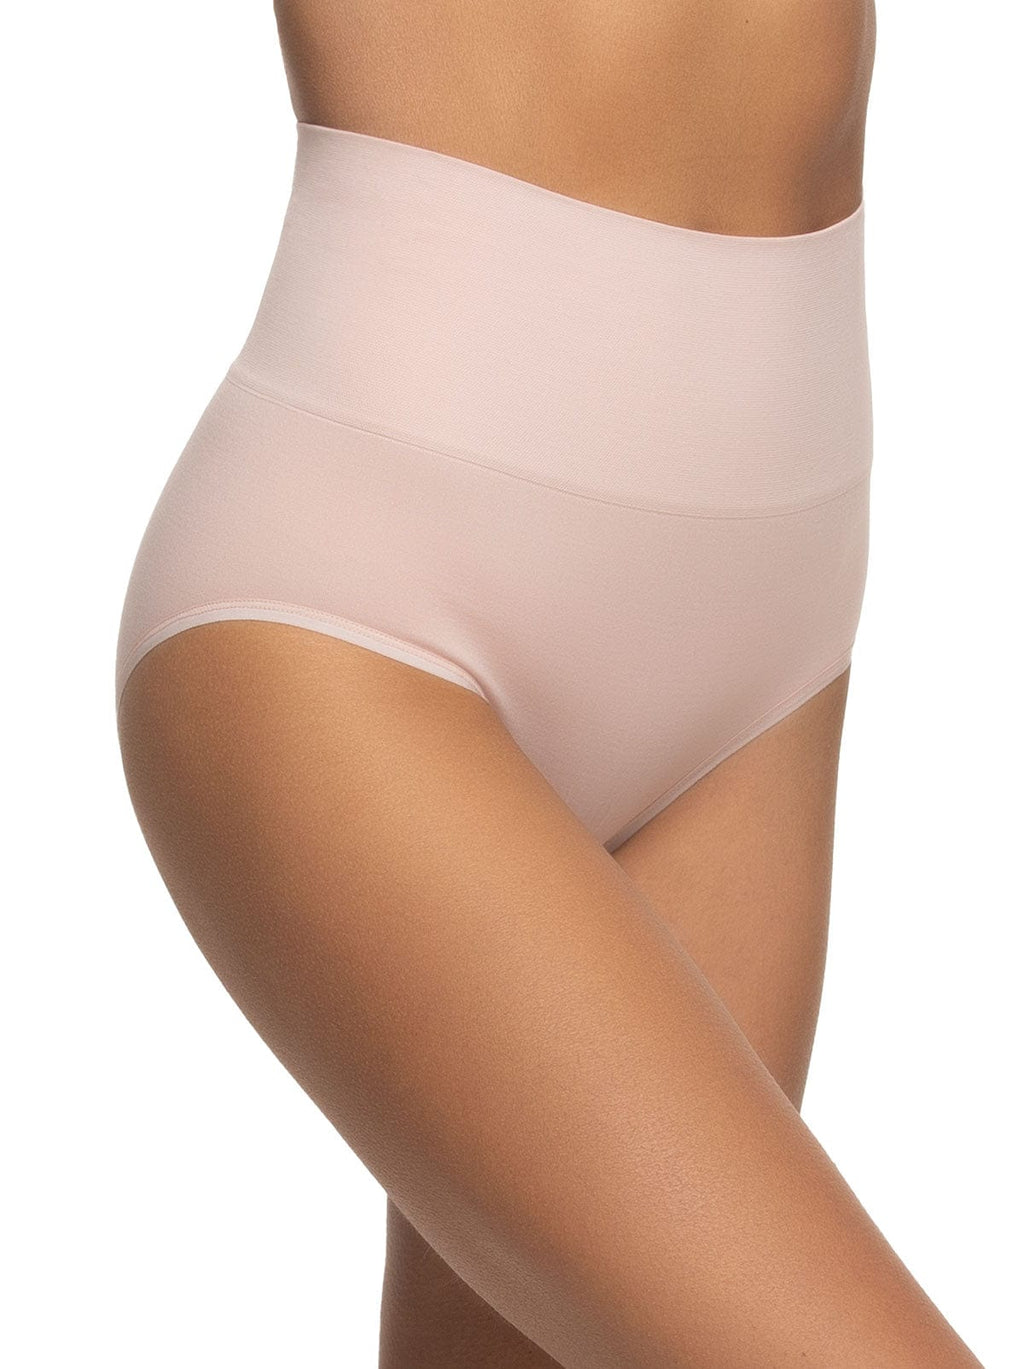 GLORIA VANDERBILT Women's Plus Size 3 Pack Tag Free Seamless with Lace  Detail Brief Underwear Set 